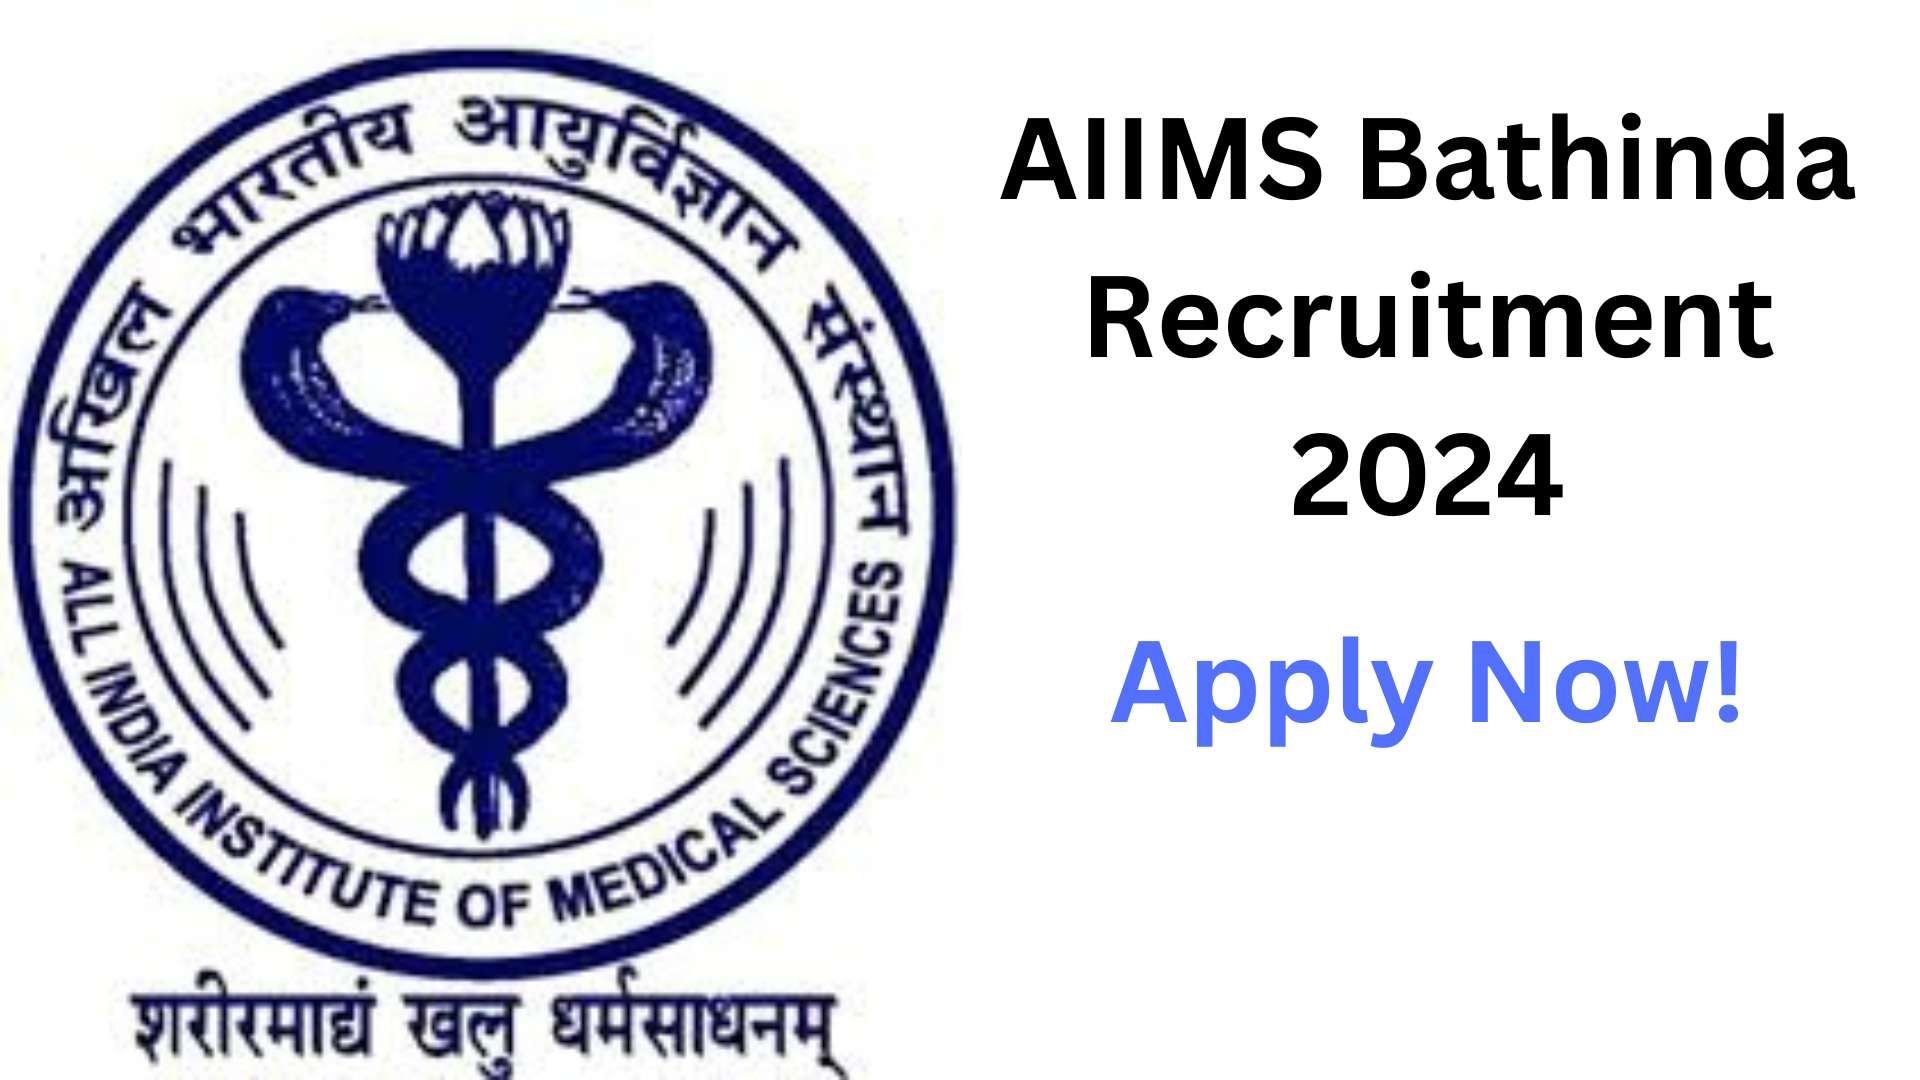 AIIMS Bathinda Technician (Radiotherapy) Recruitment 2024, Apply Now, Check Latest Vacancy, Details, Eligibility Criteria